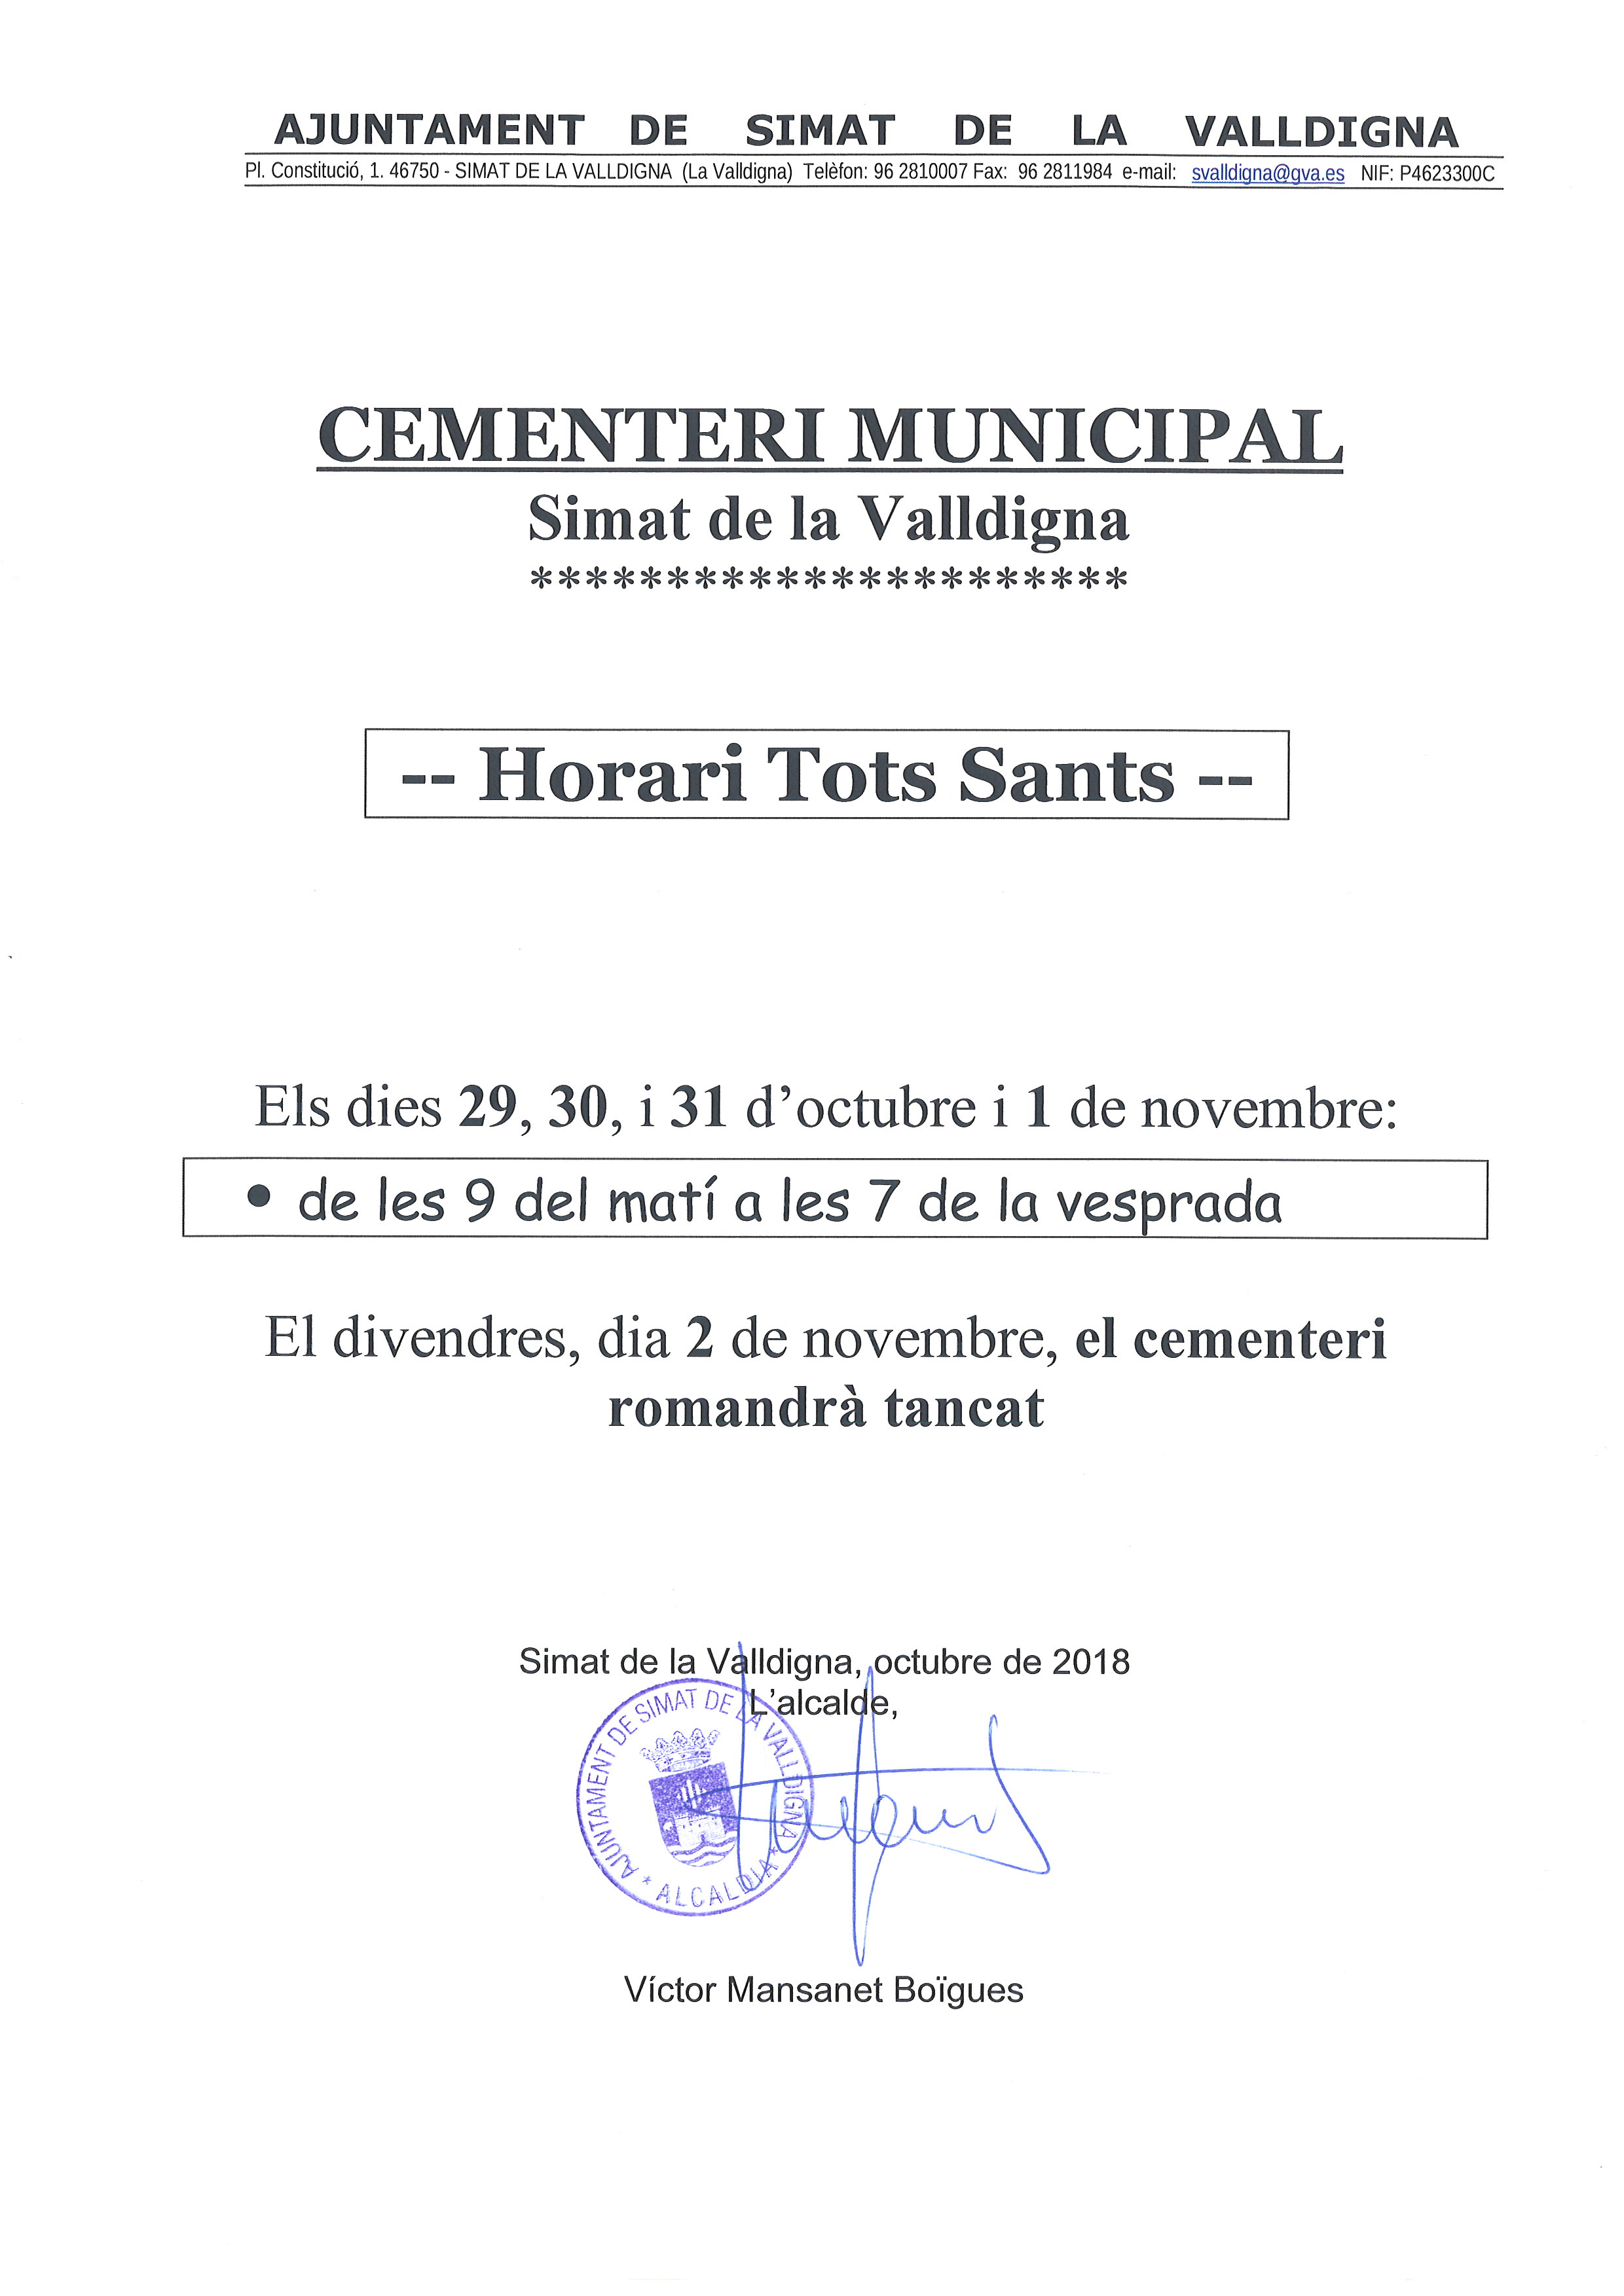 Cementeri_Tots_Sants.jpg